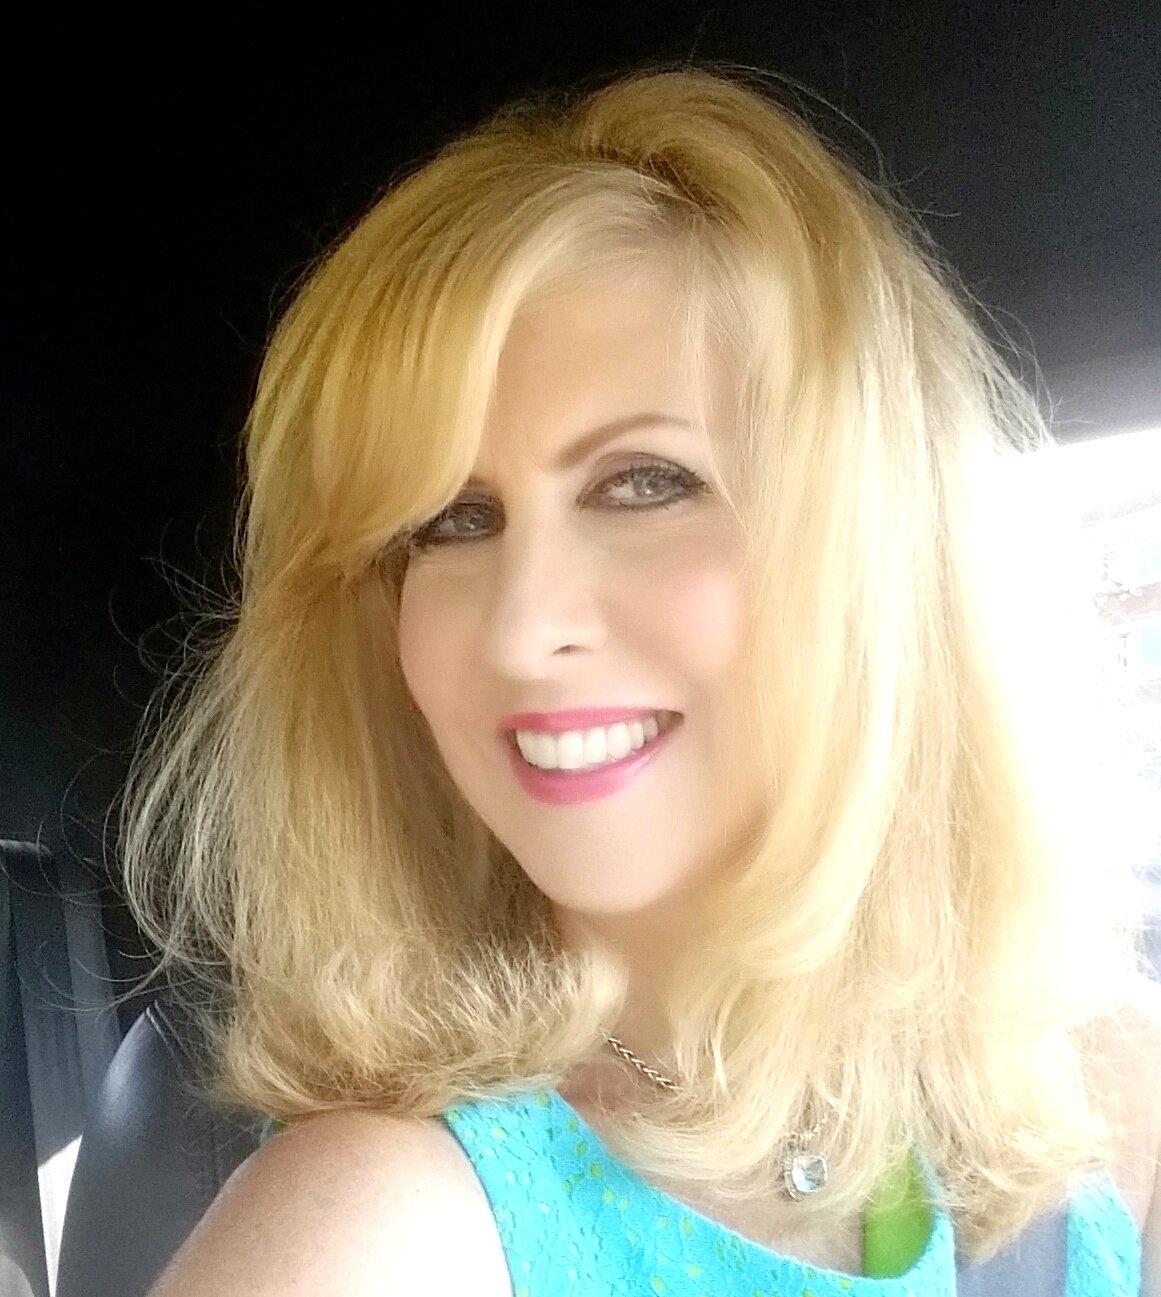 Selfie of a blonde woman wearing a blue top